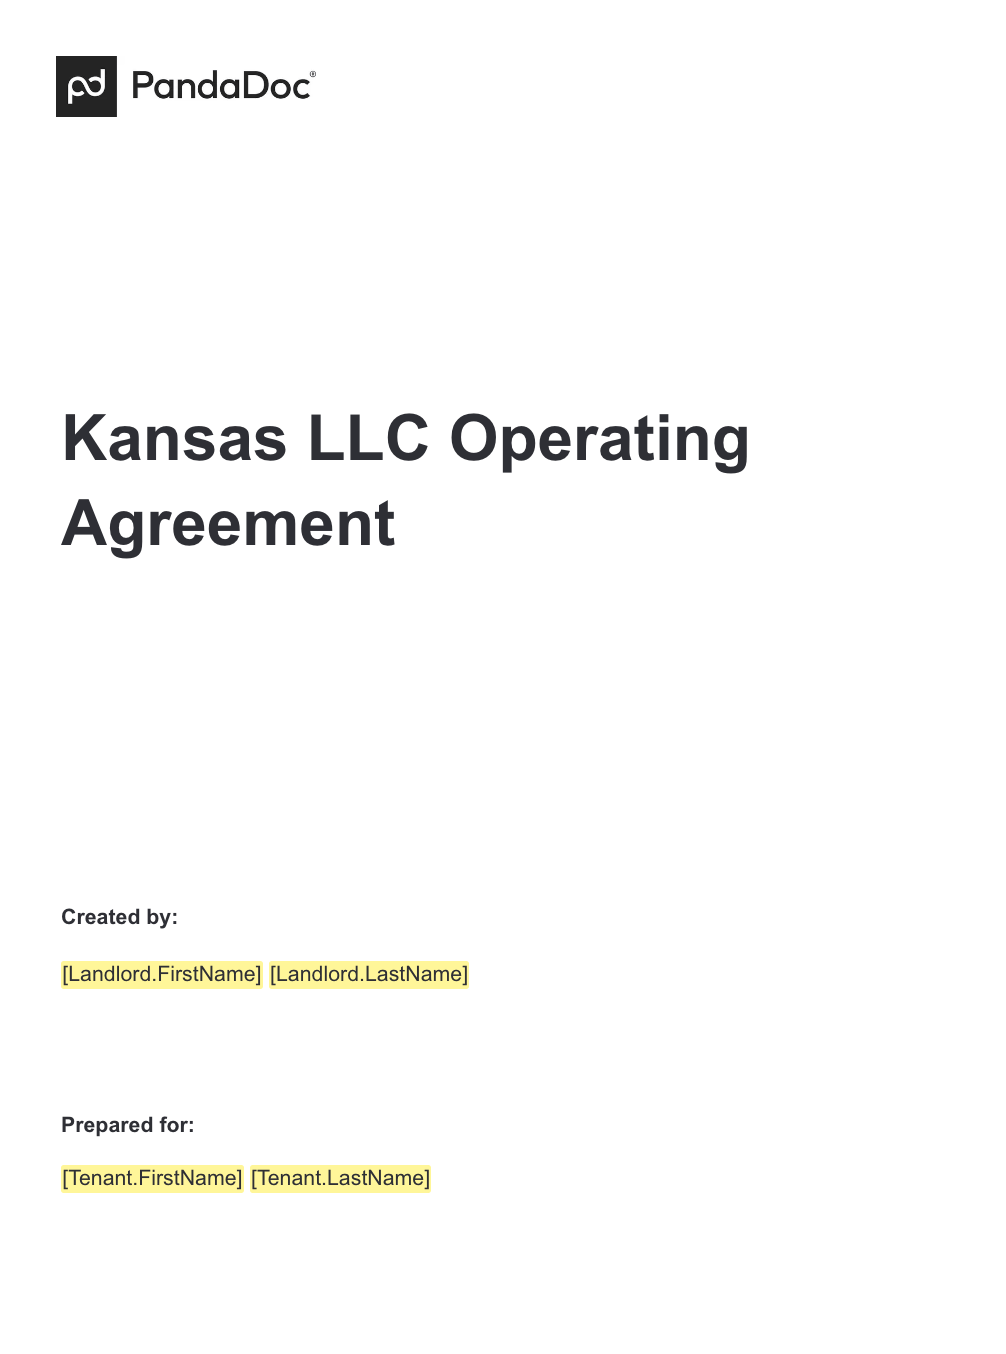 Kansas LLC Operating Agreement 